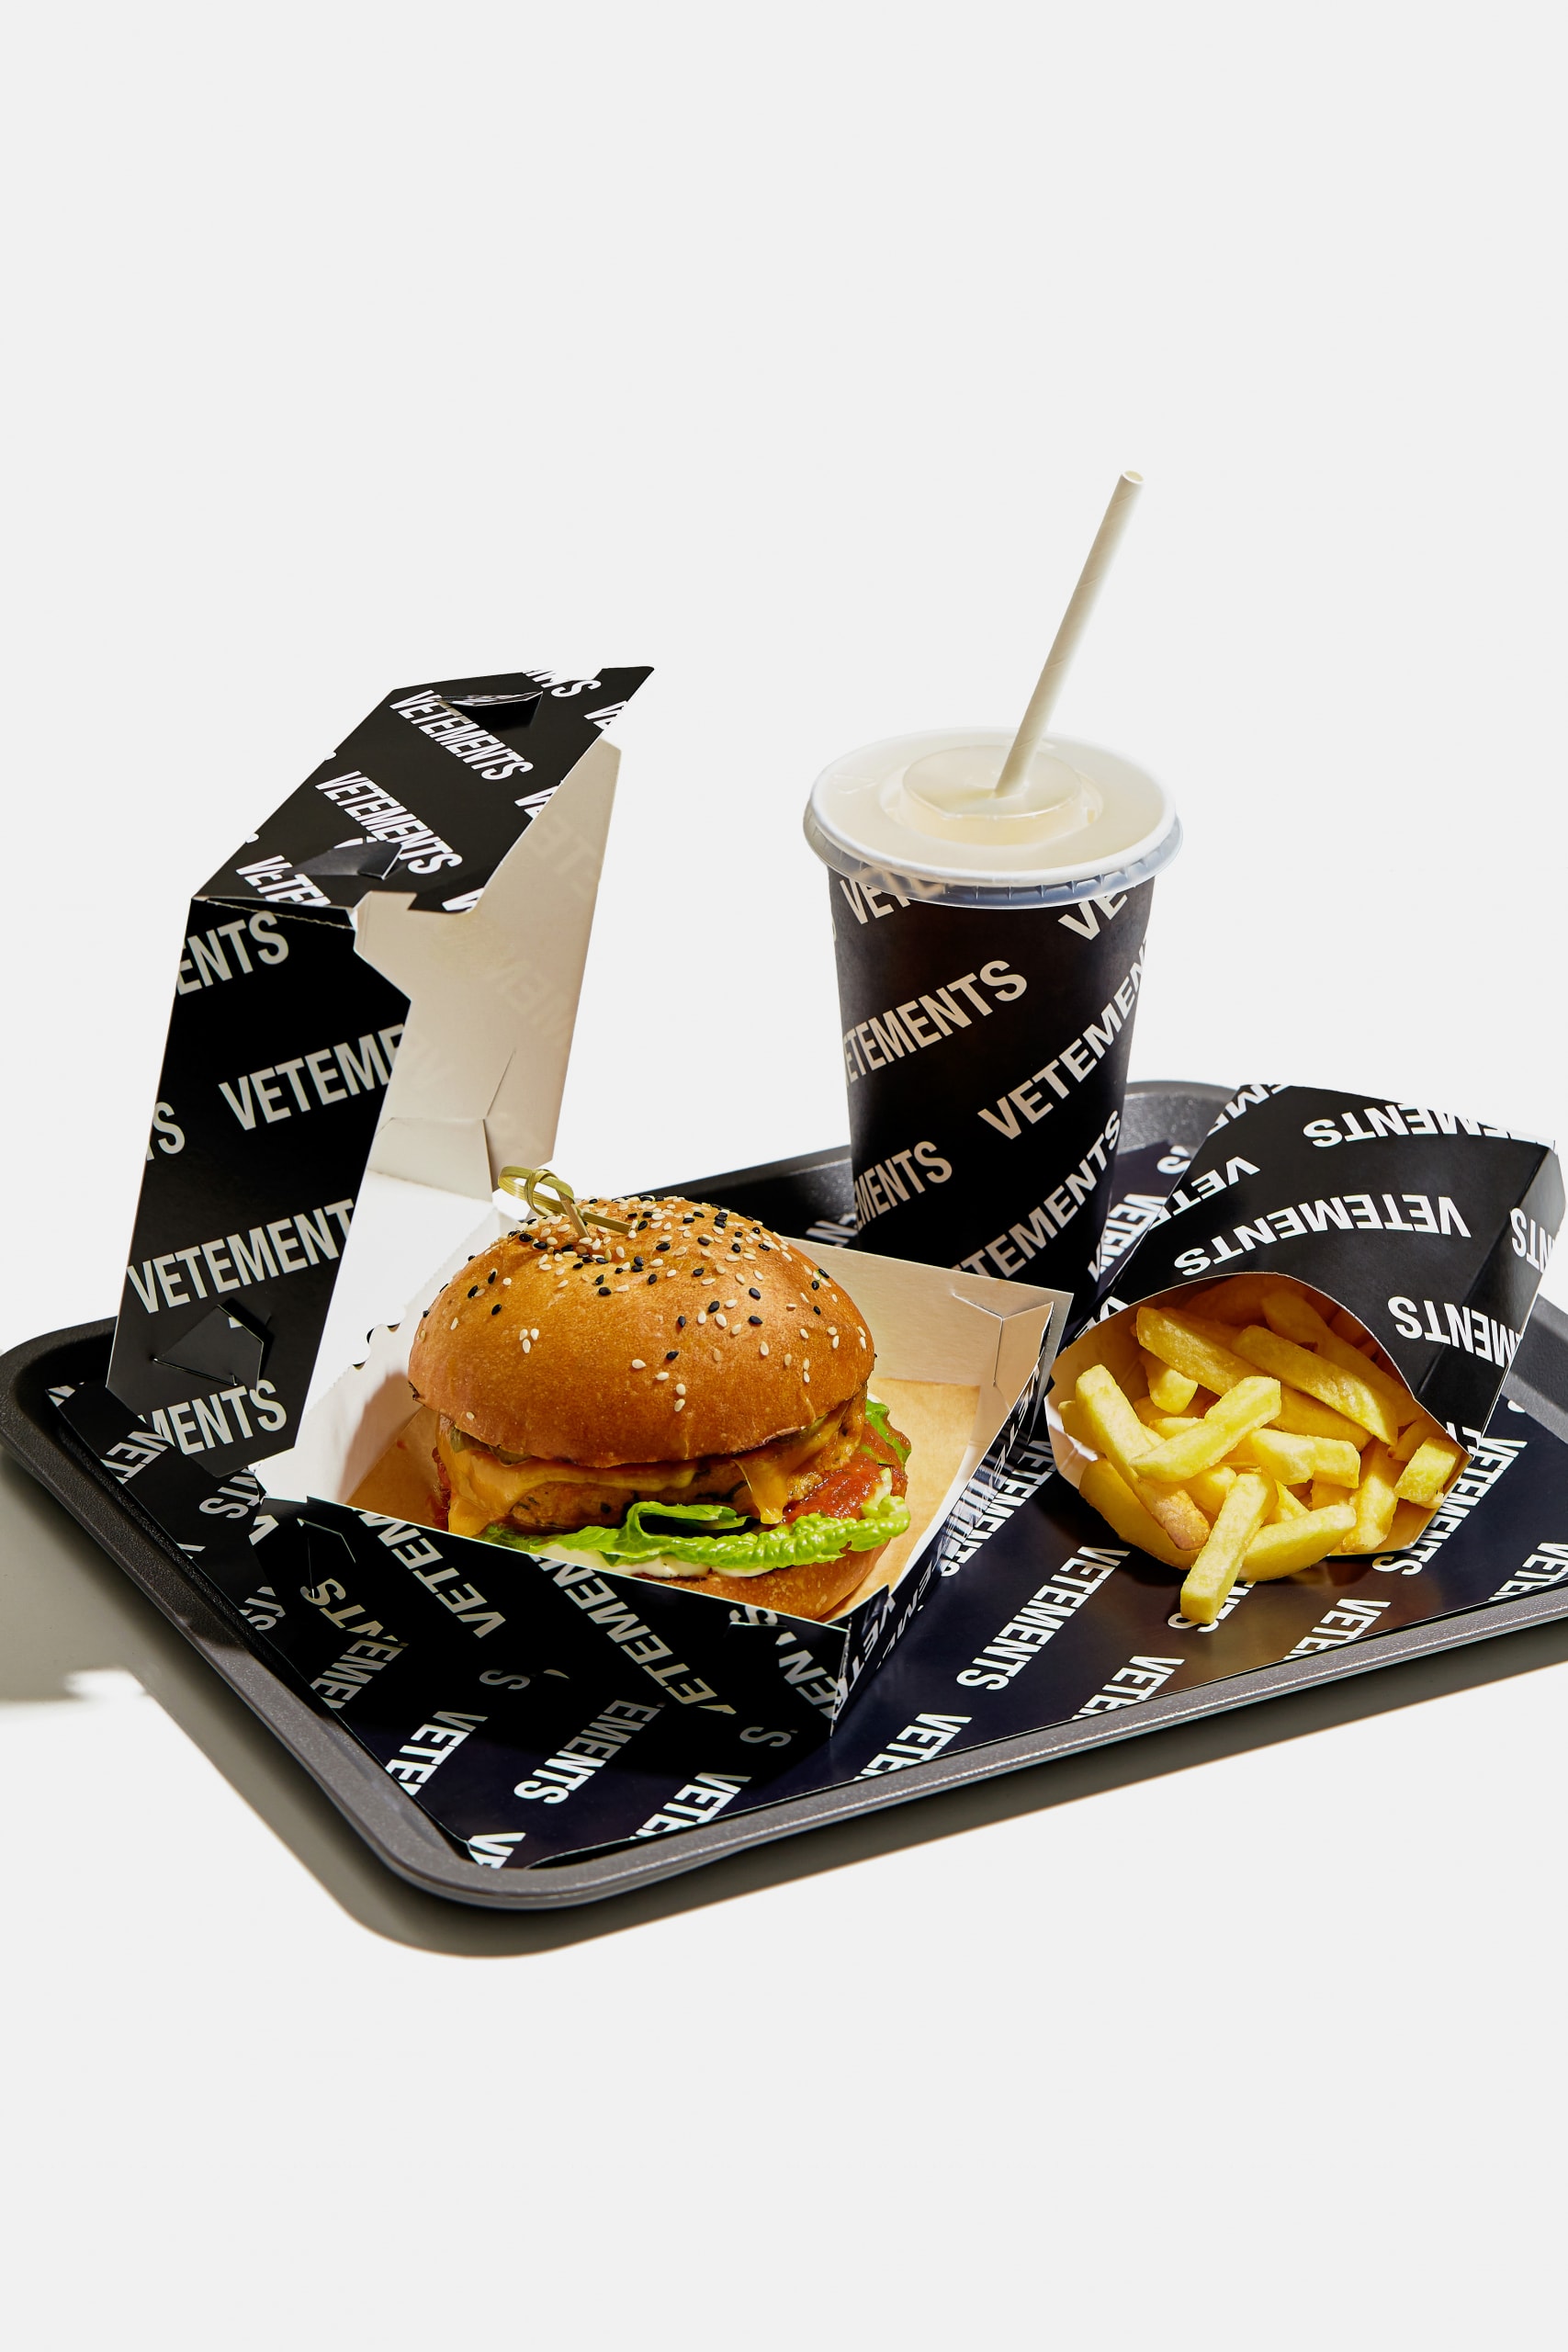 Vetements Burger Fries Meal Fast Food KM20 Restaurant